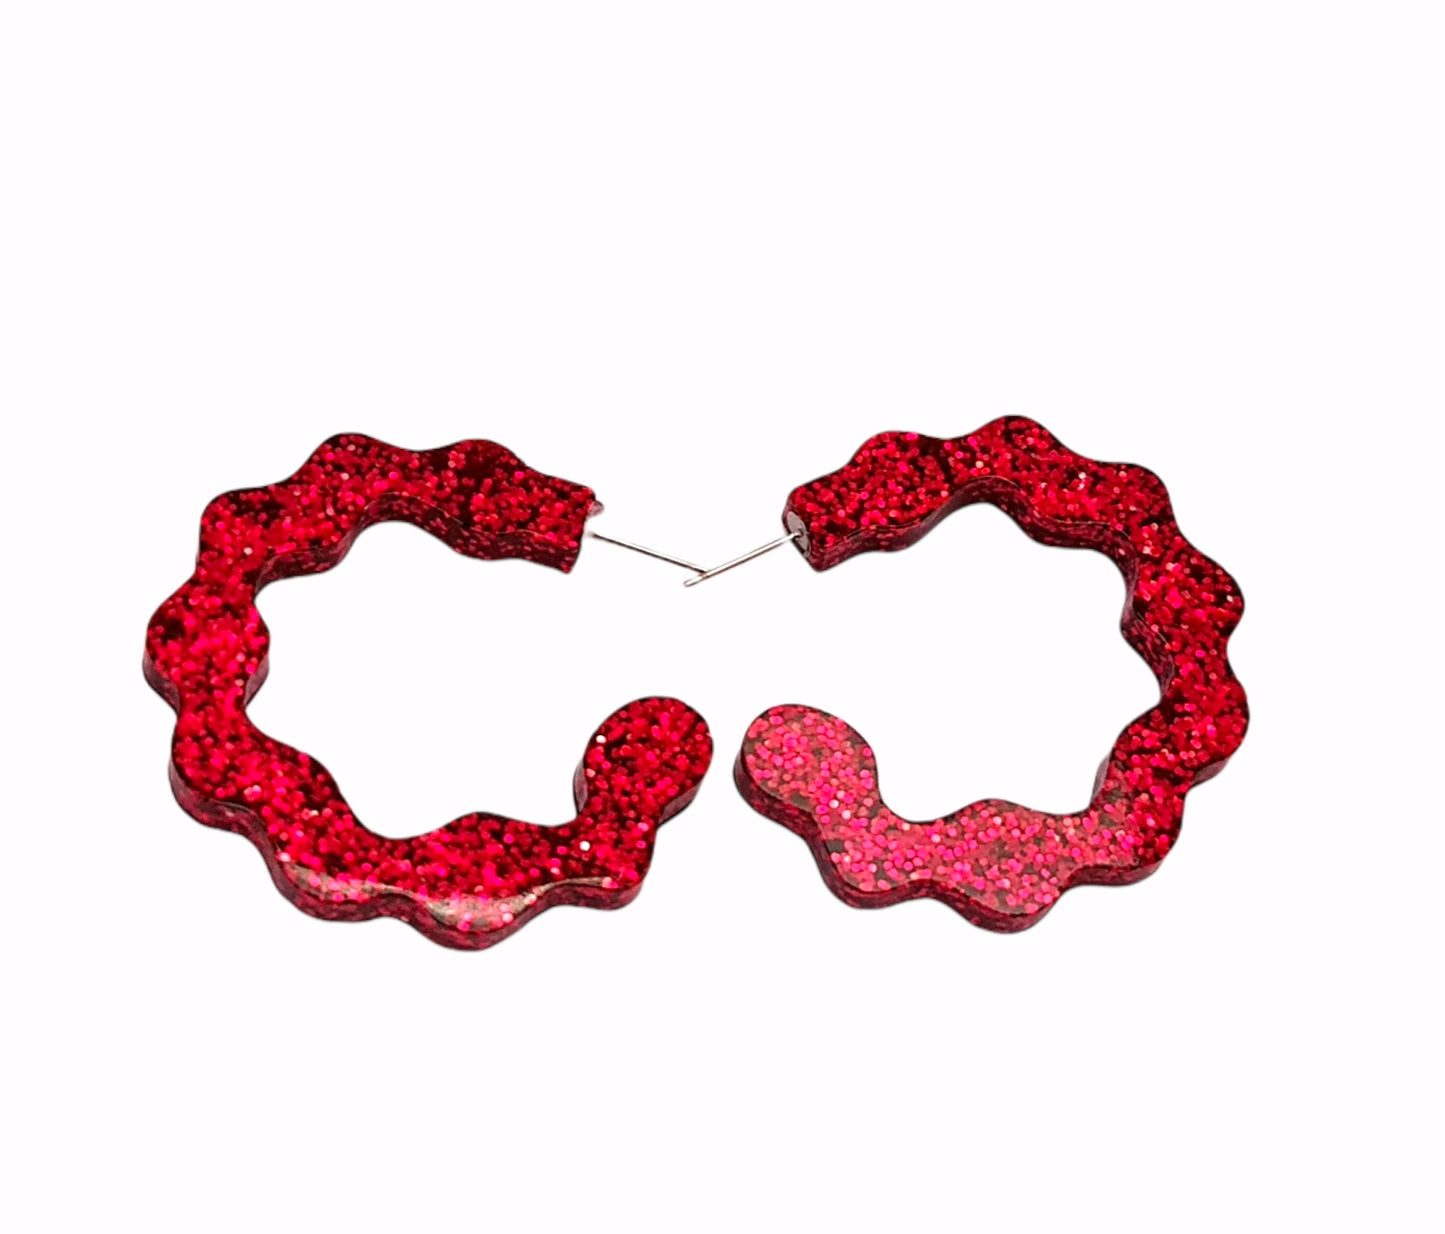 Large Wave Hoops Stud Earrings, Red Glitter, Resin Dangle Statement Earrings, Unique Design, Modern, Lightweight